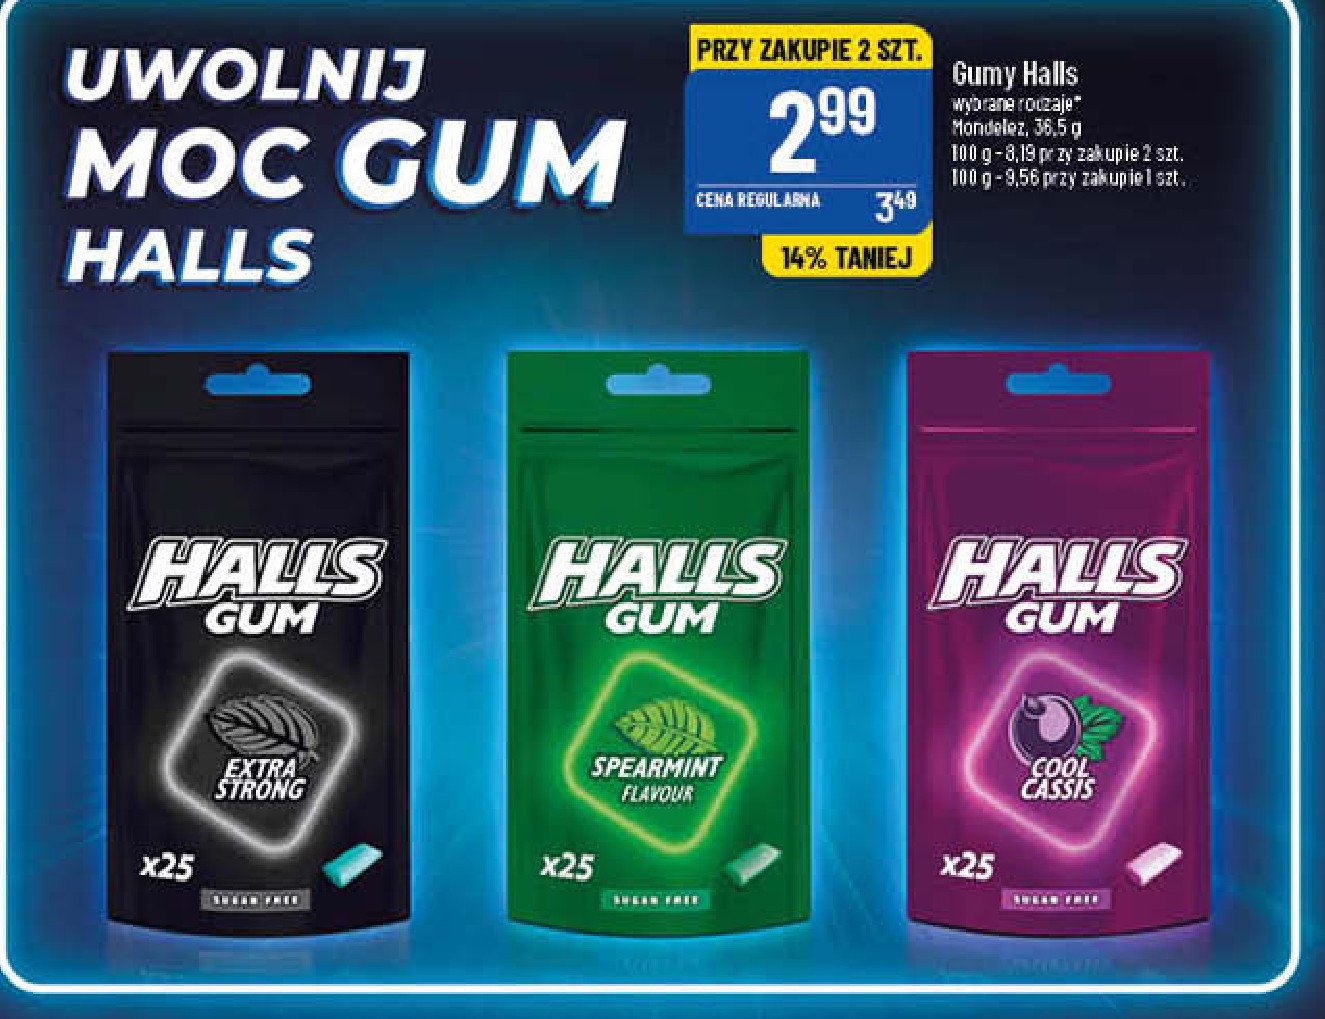 Guma spearmint Halls gum promocja